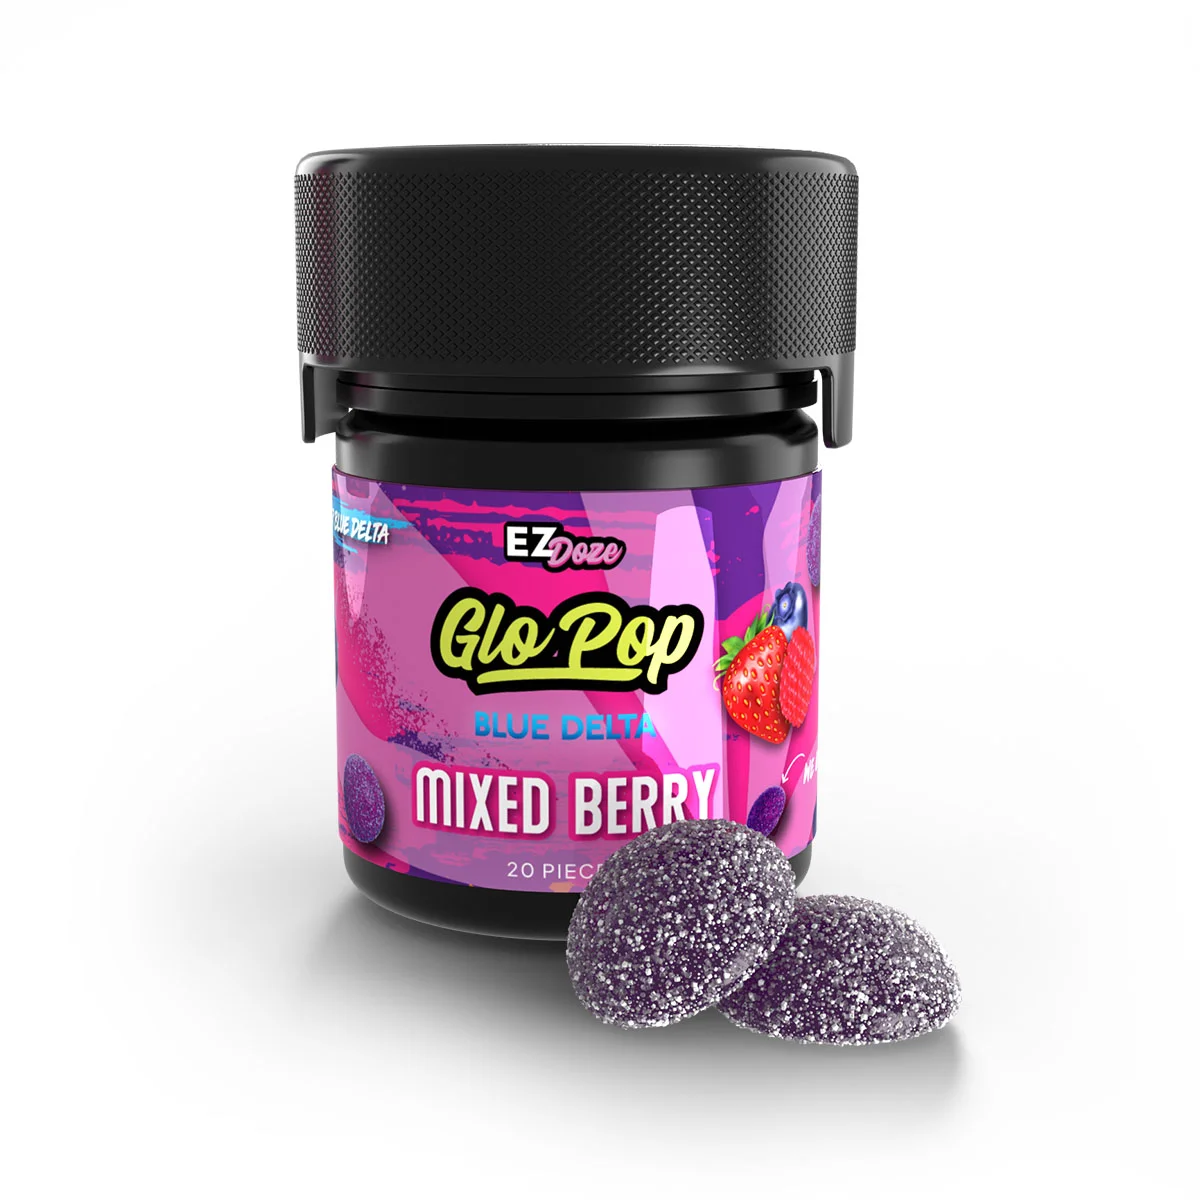 glopop-ez-dose-mixed-berry-20pc-jar.jpg